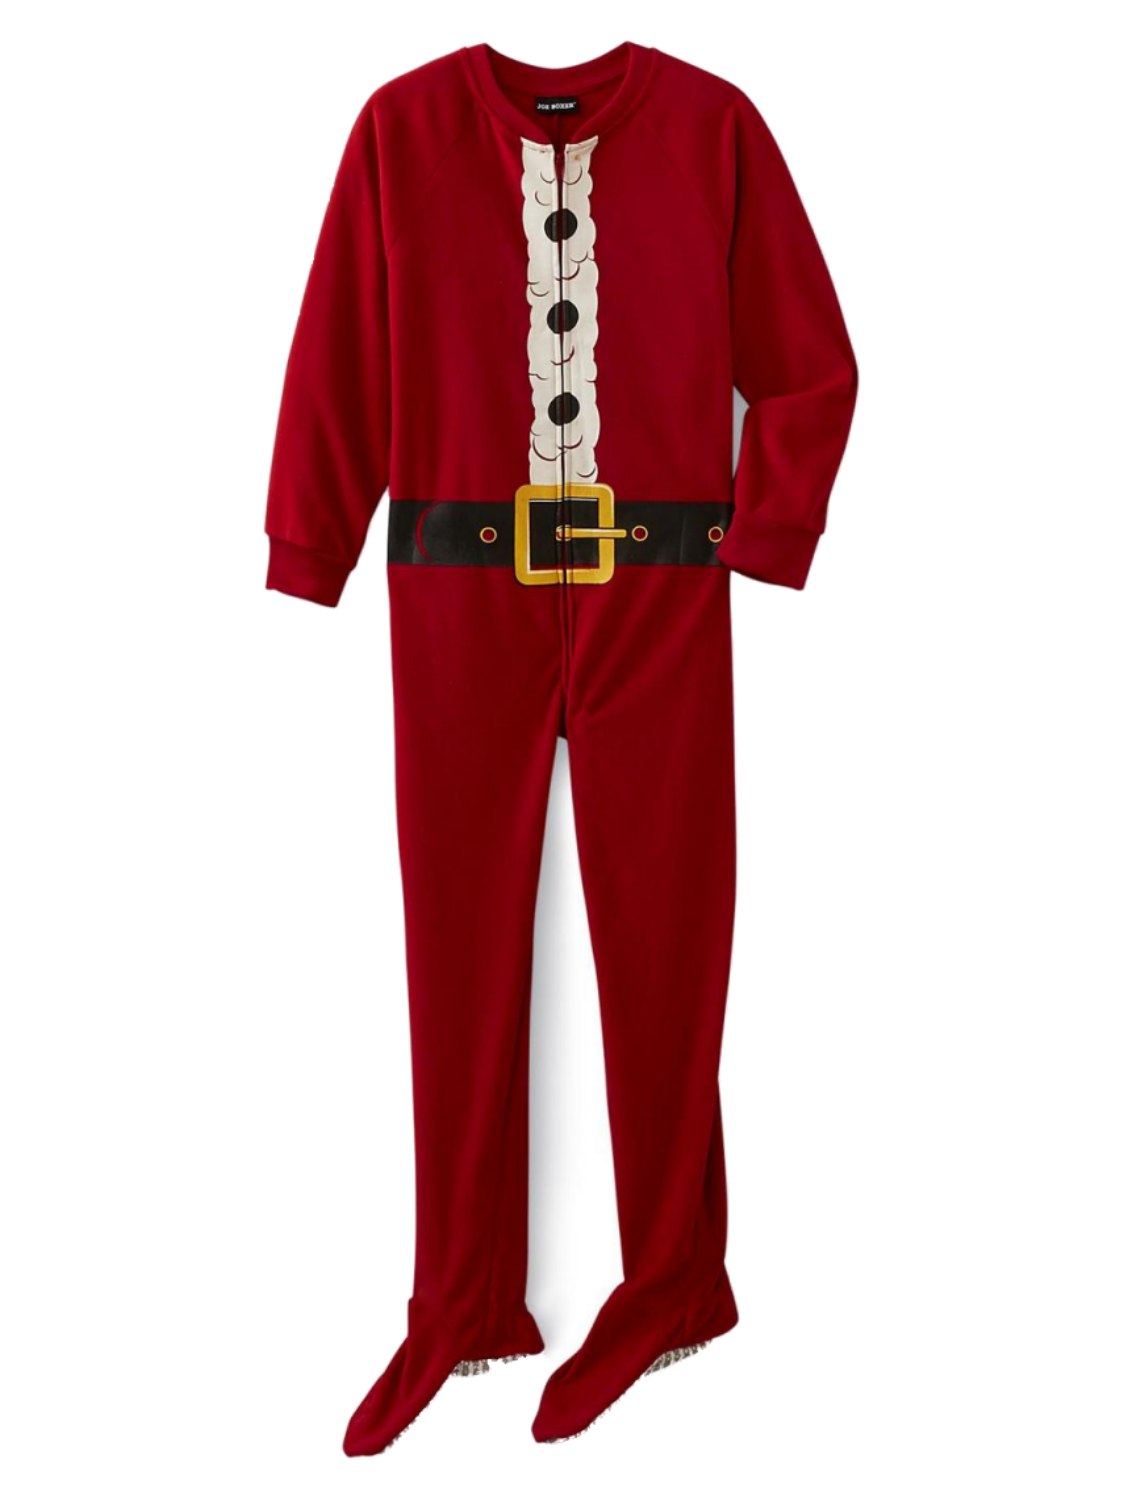 Joe Boxer Infant & Toddler Boys Red Fleece Santa Claus Christmas Sleeper Footie Pajama